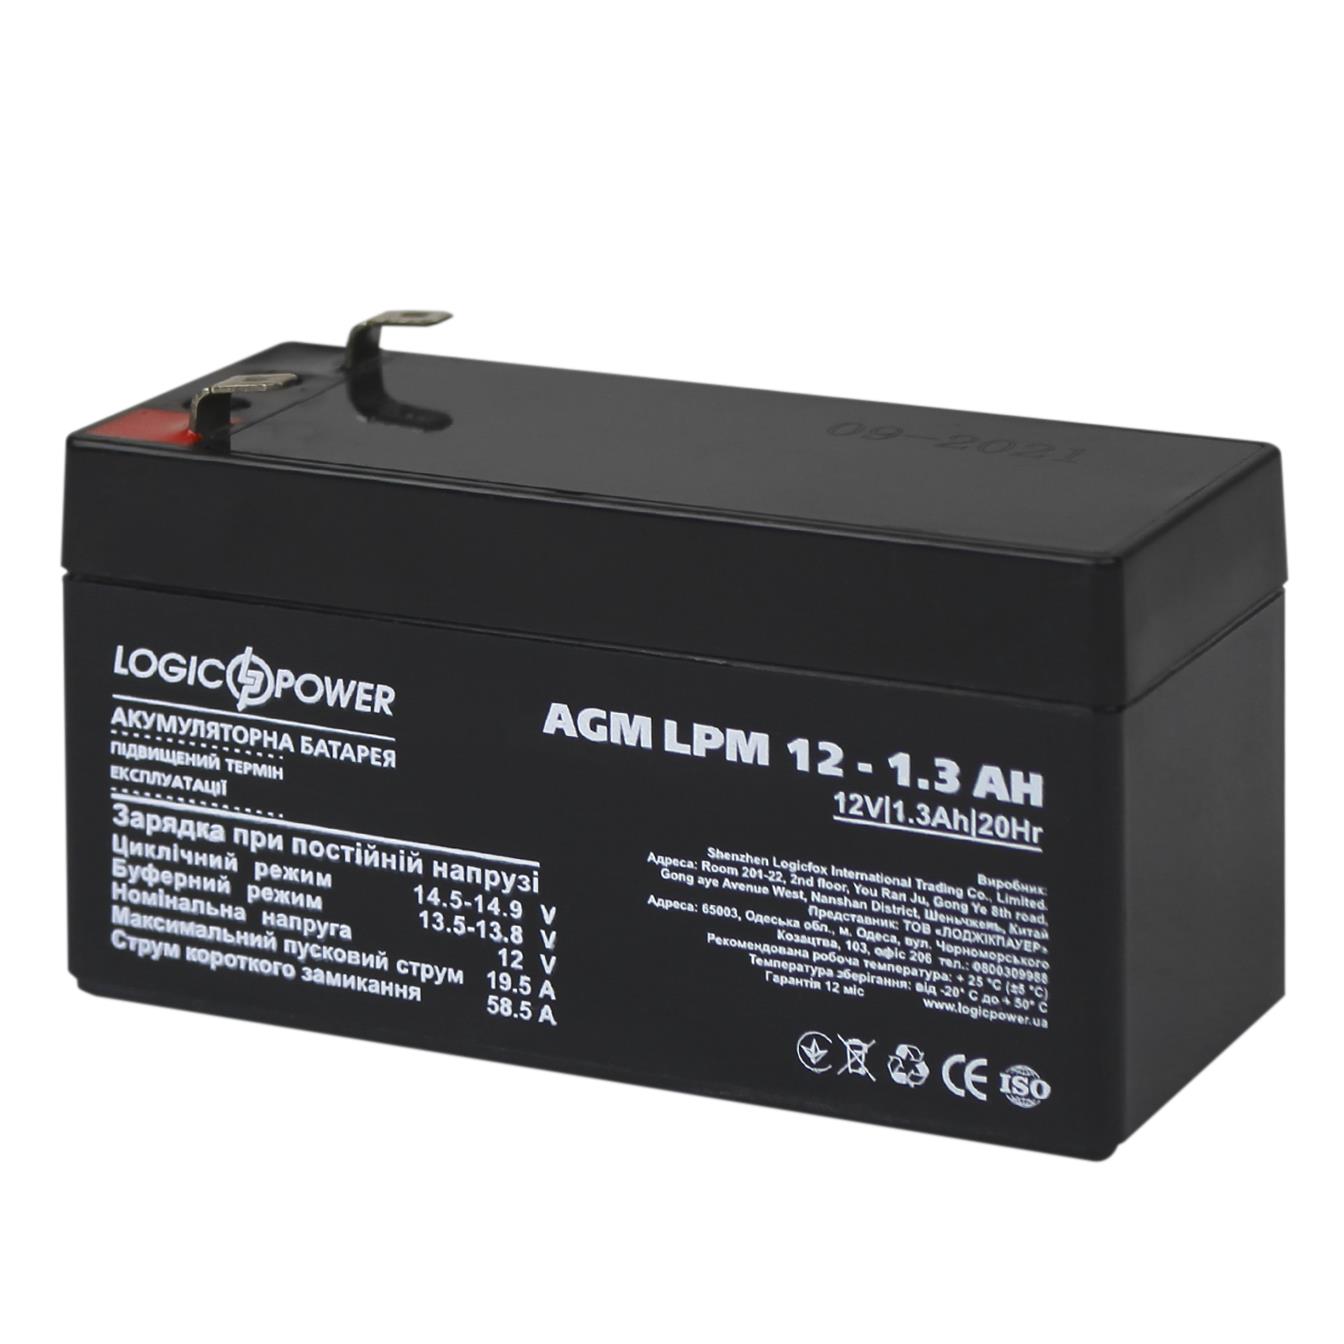 Купить аккумулятор logicpower для ибп LogicPower AGM LPM 12V - 1.3 Ah (4131) в Киеве